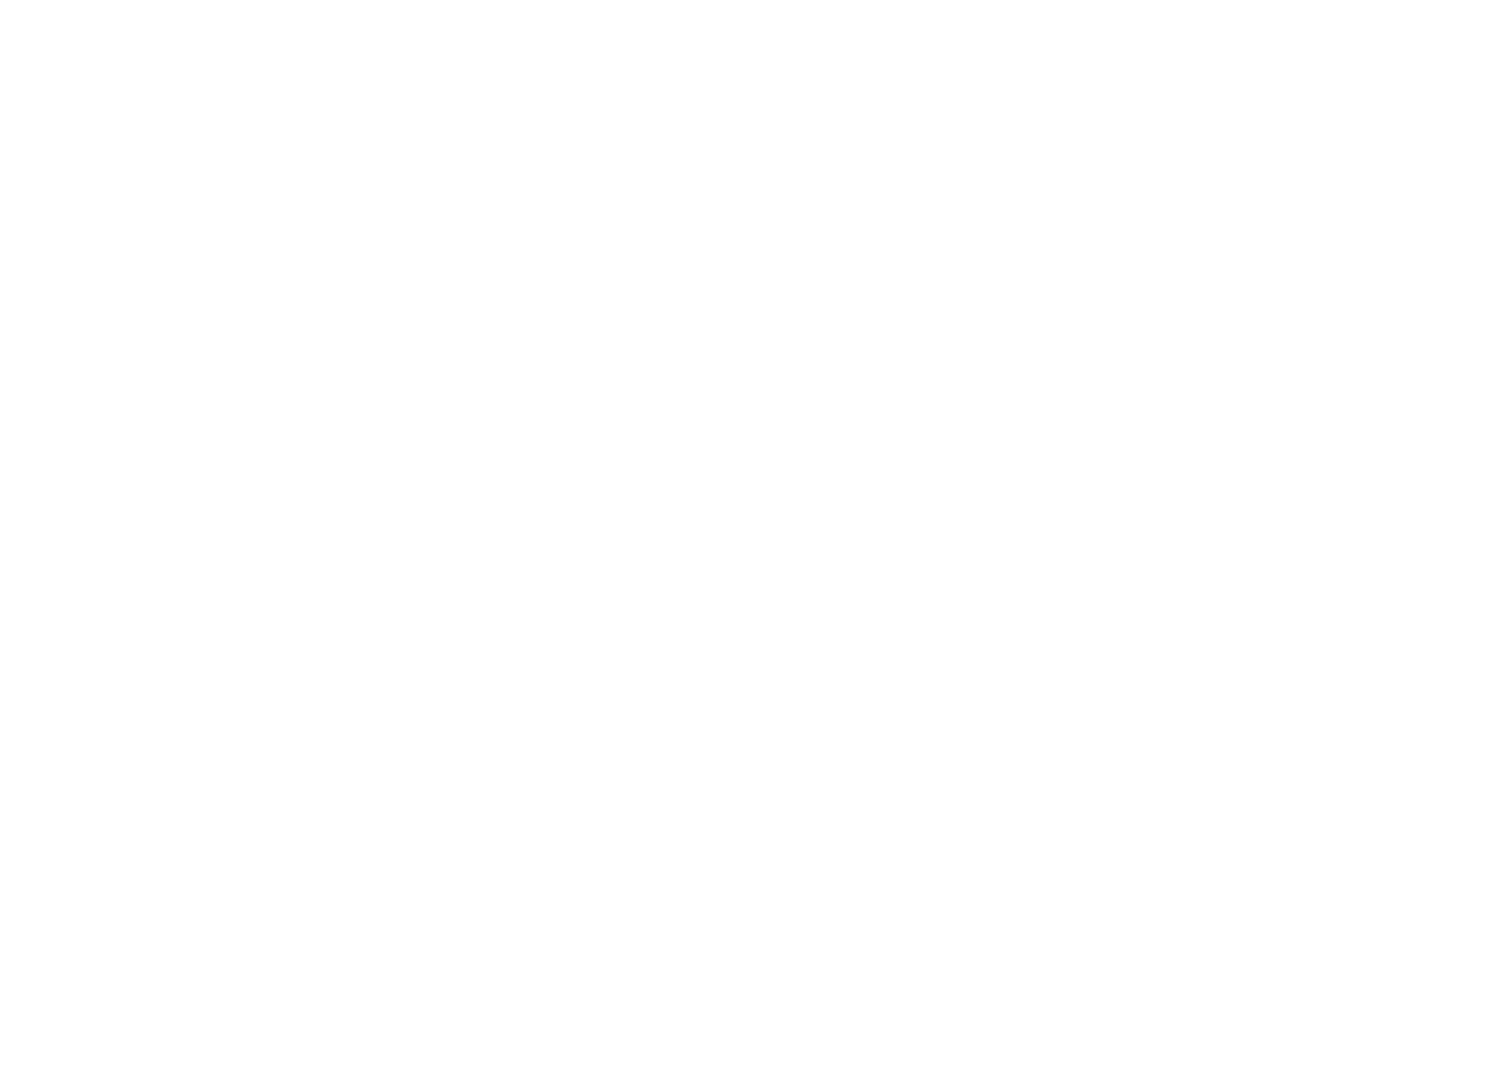 Housedean Farm Campsite